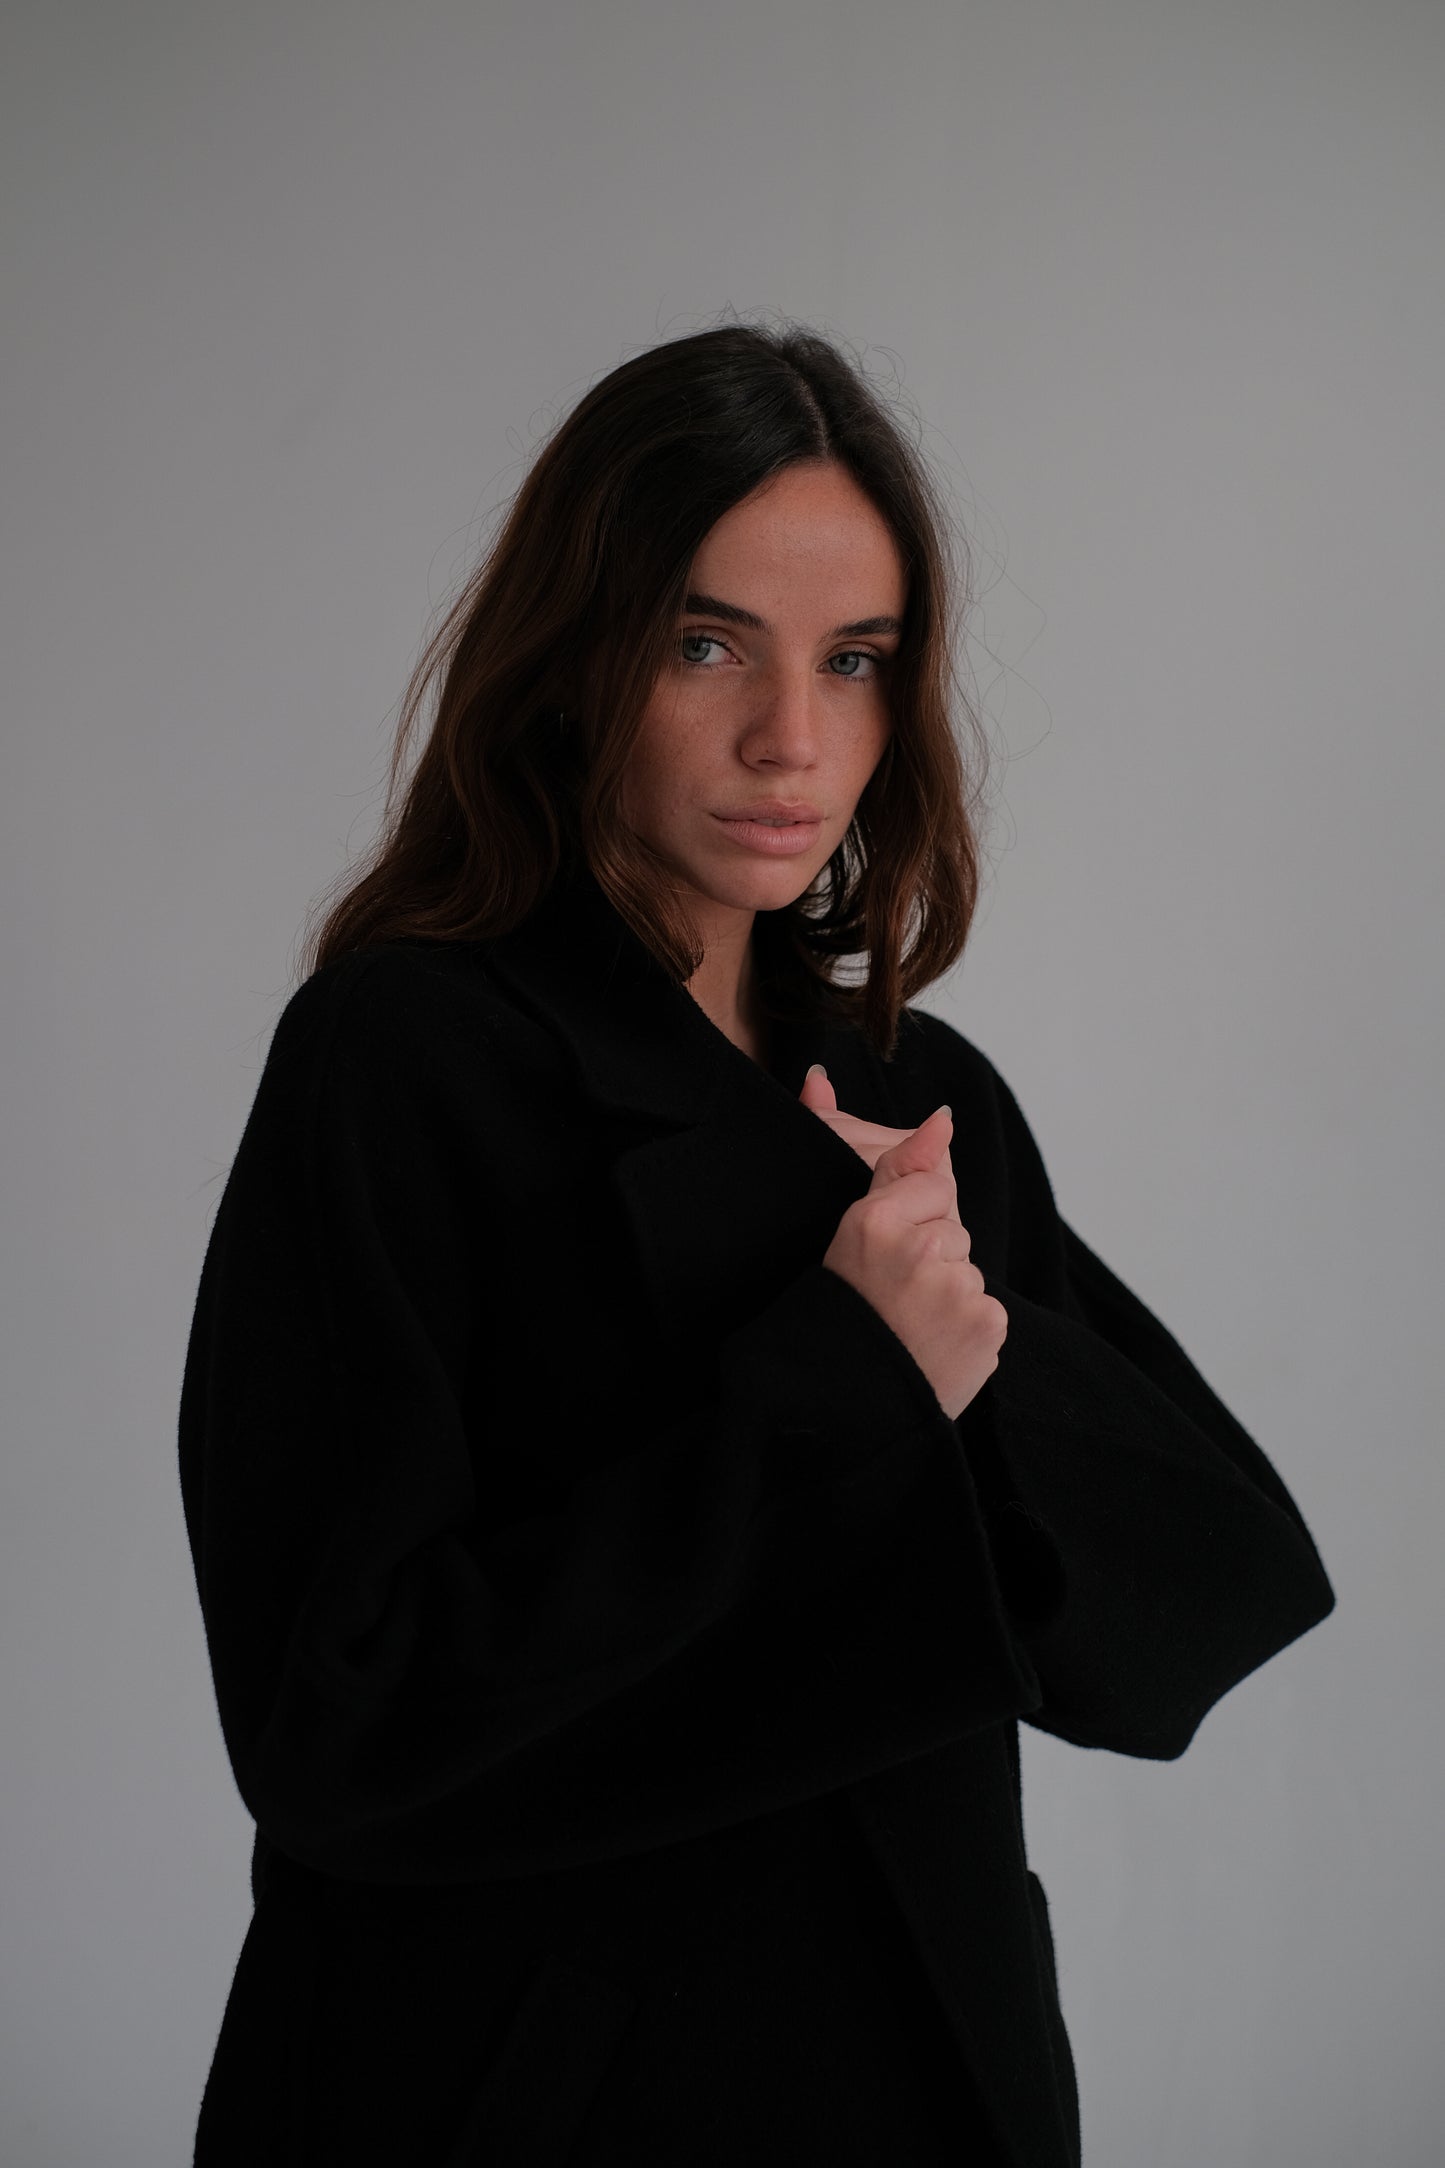 classic wool coat in black